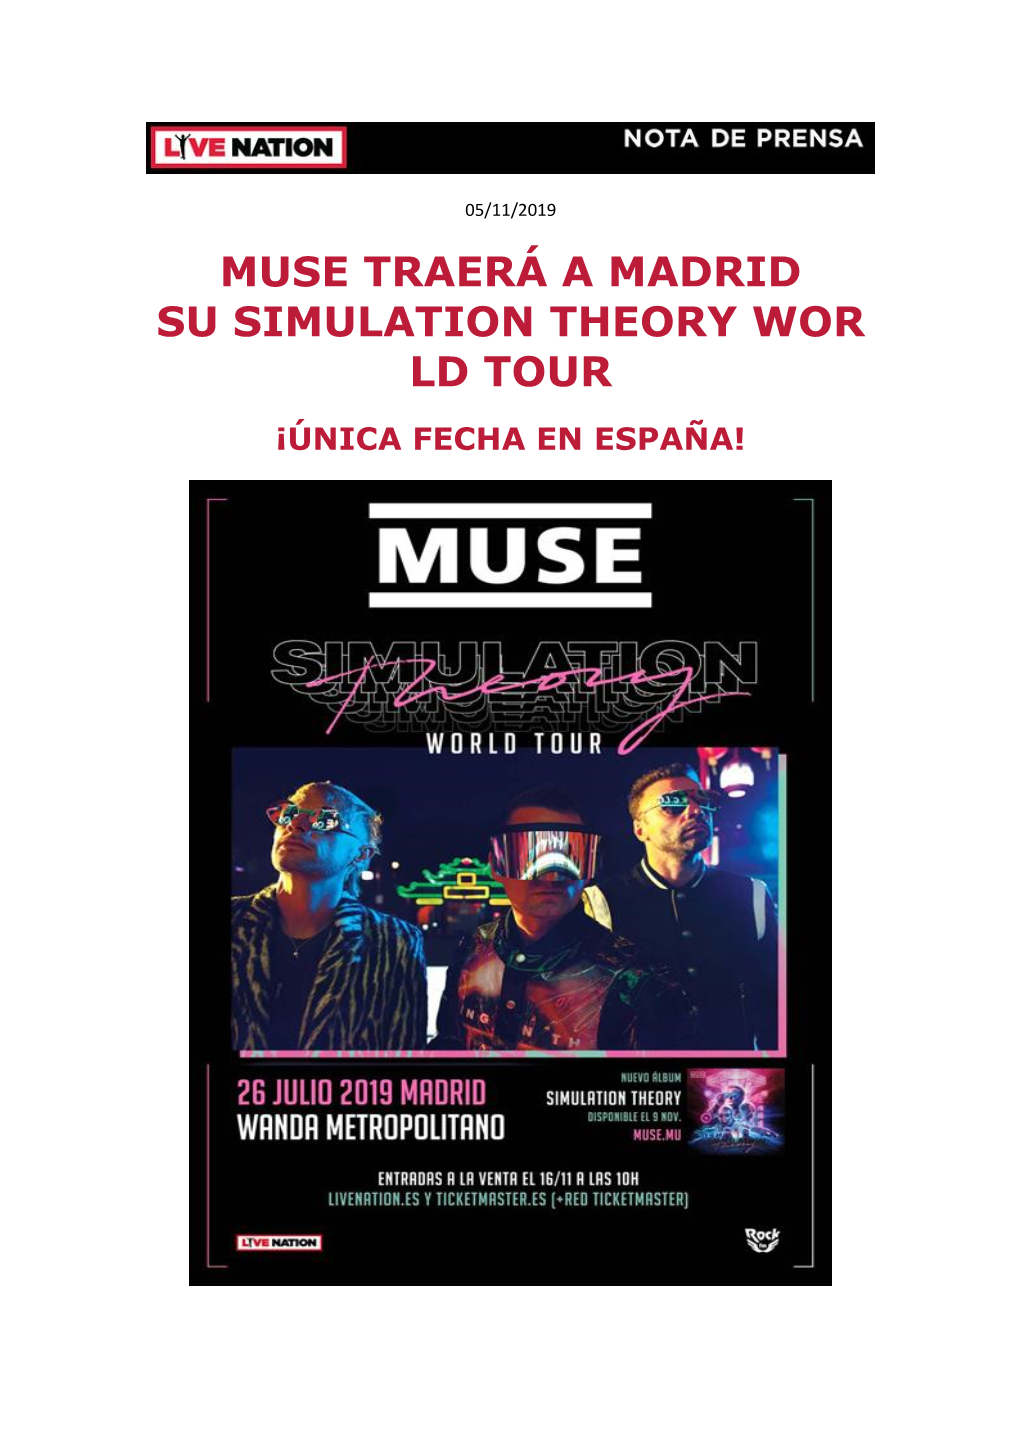 Muse Traerá a Madrid Su Simulation Theory Wor Ld Tour ¡Única Fecha En España!